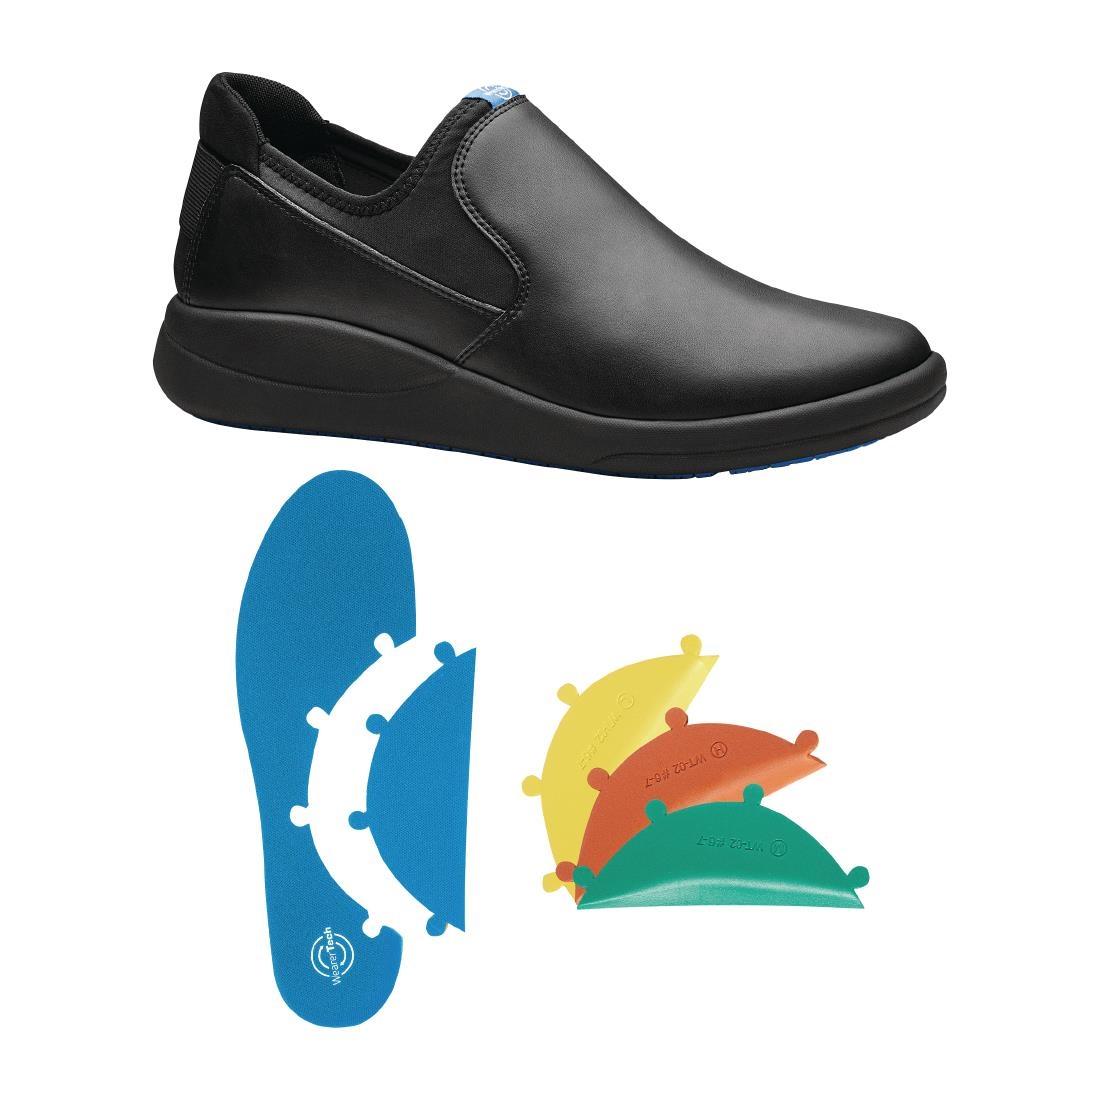 WearerTech Vitalise Slip on Shoe Black/Black with Modular Insole Size 37